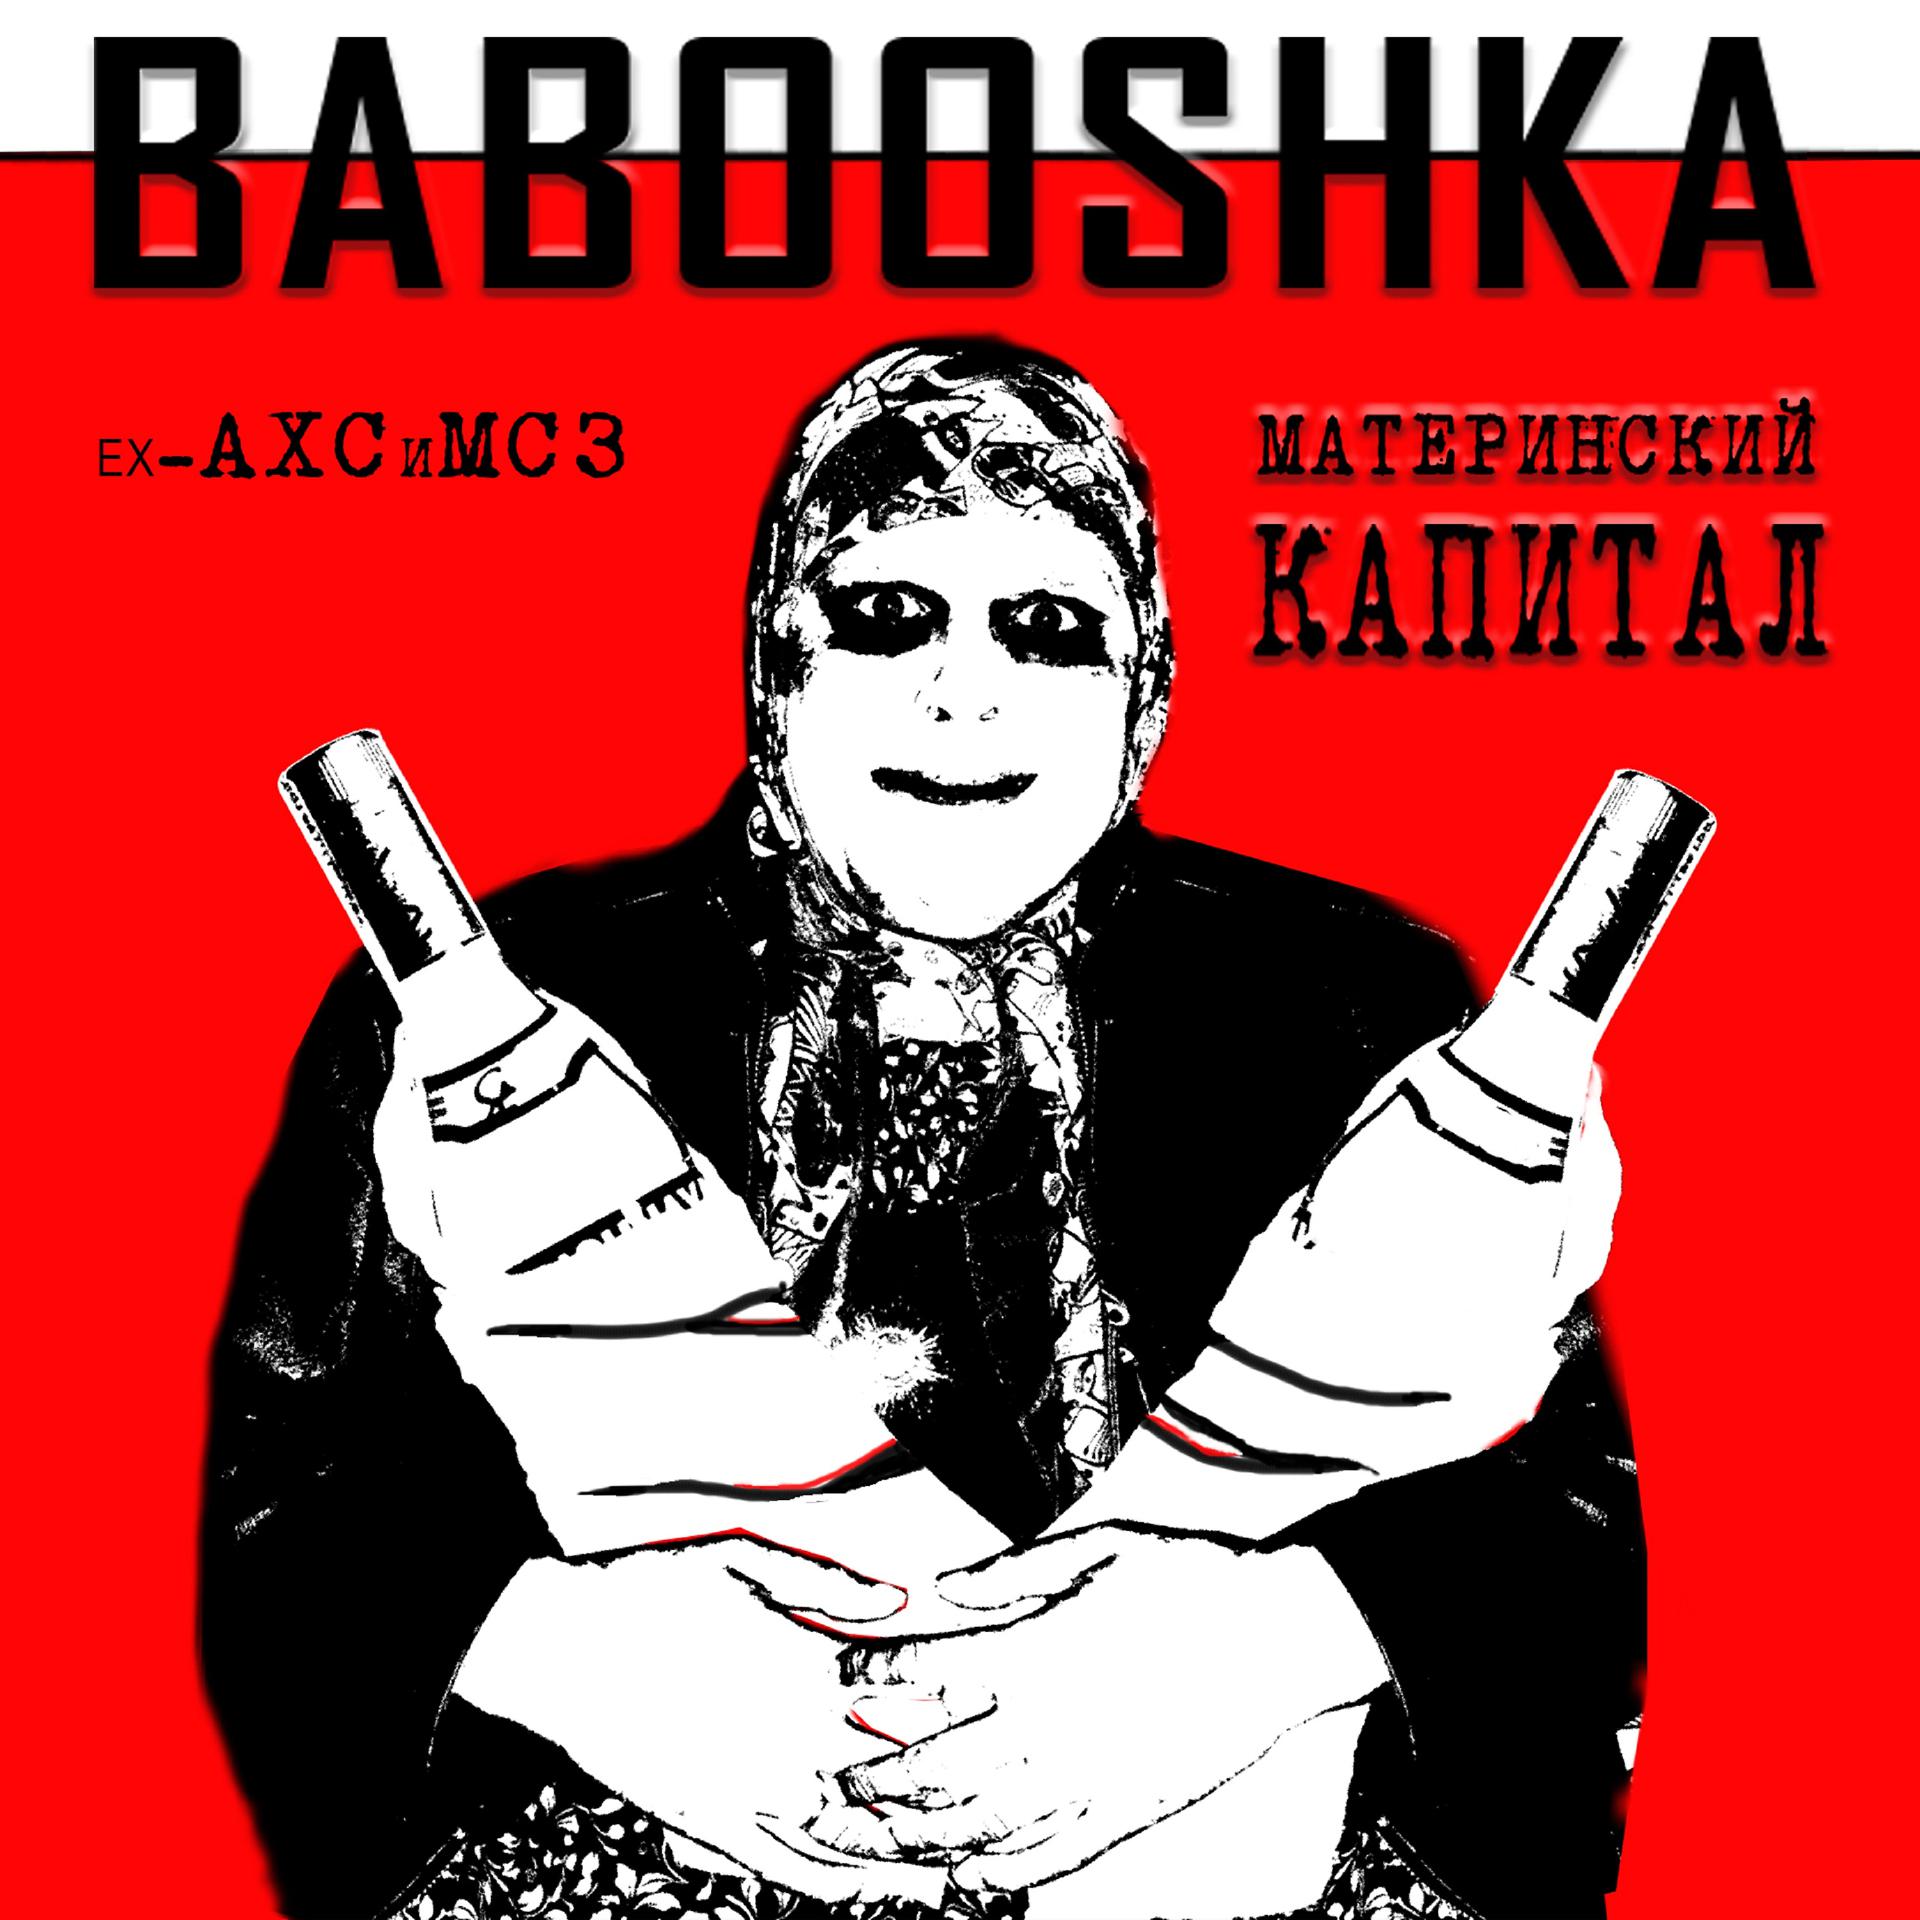 Матом музыка популярная. Babooshka группа. Babooshka обложки. Babooshka материнский капитал.